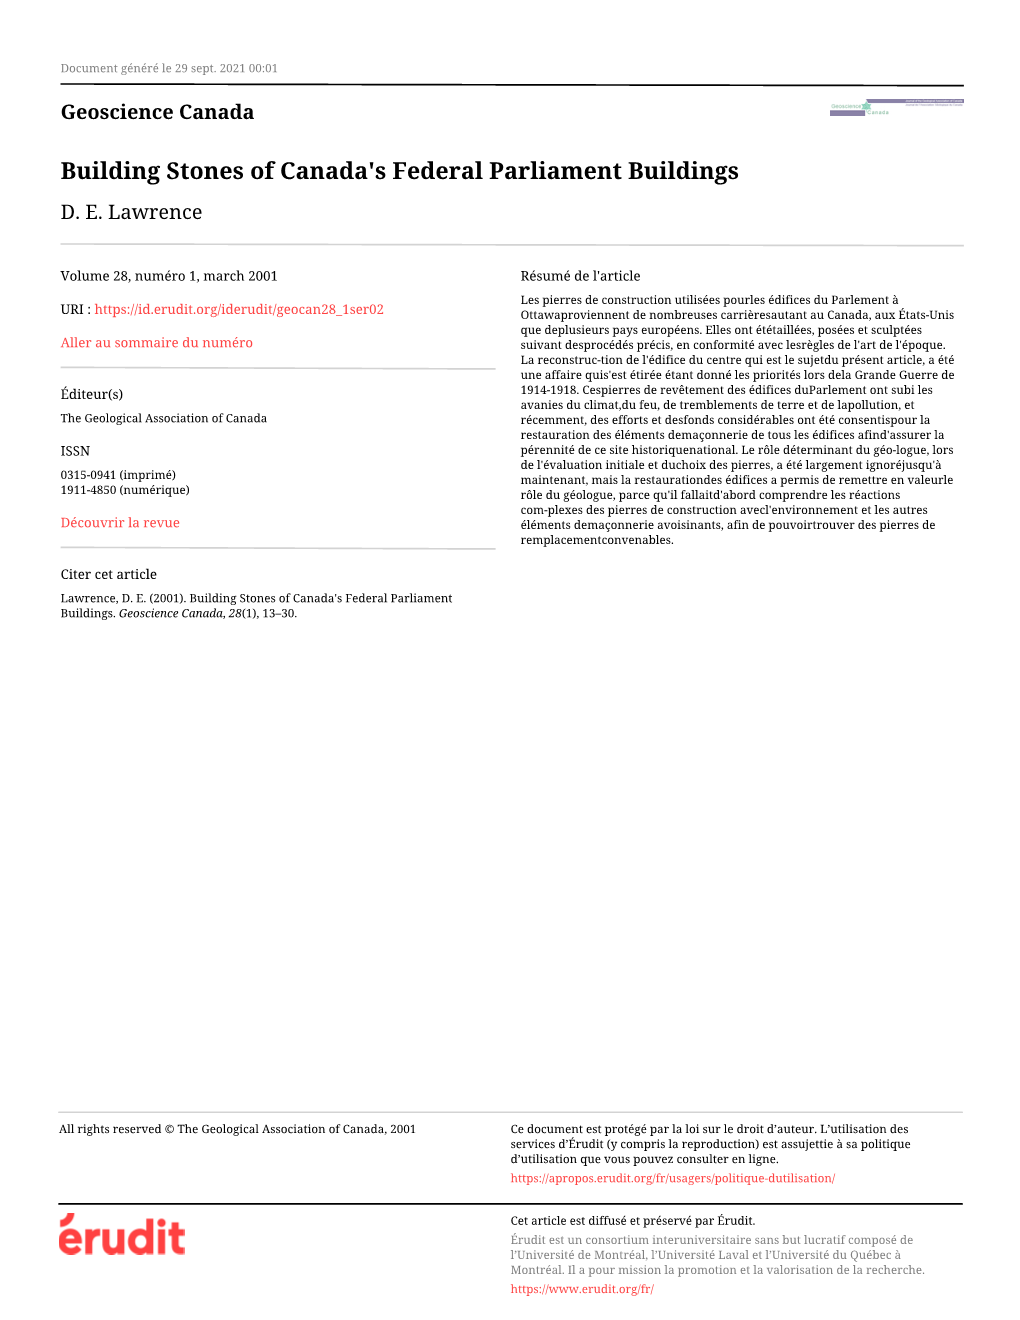 Building Stones of Canada's Federal Parliament Buildings D